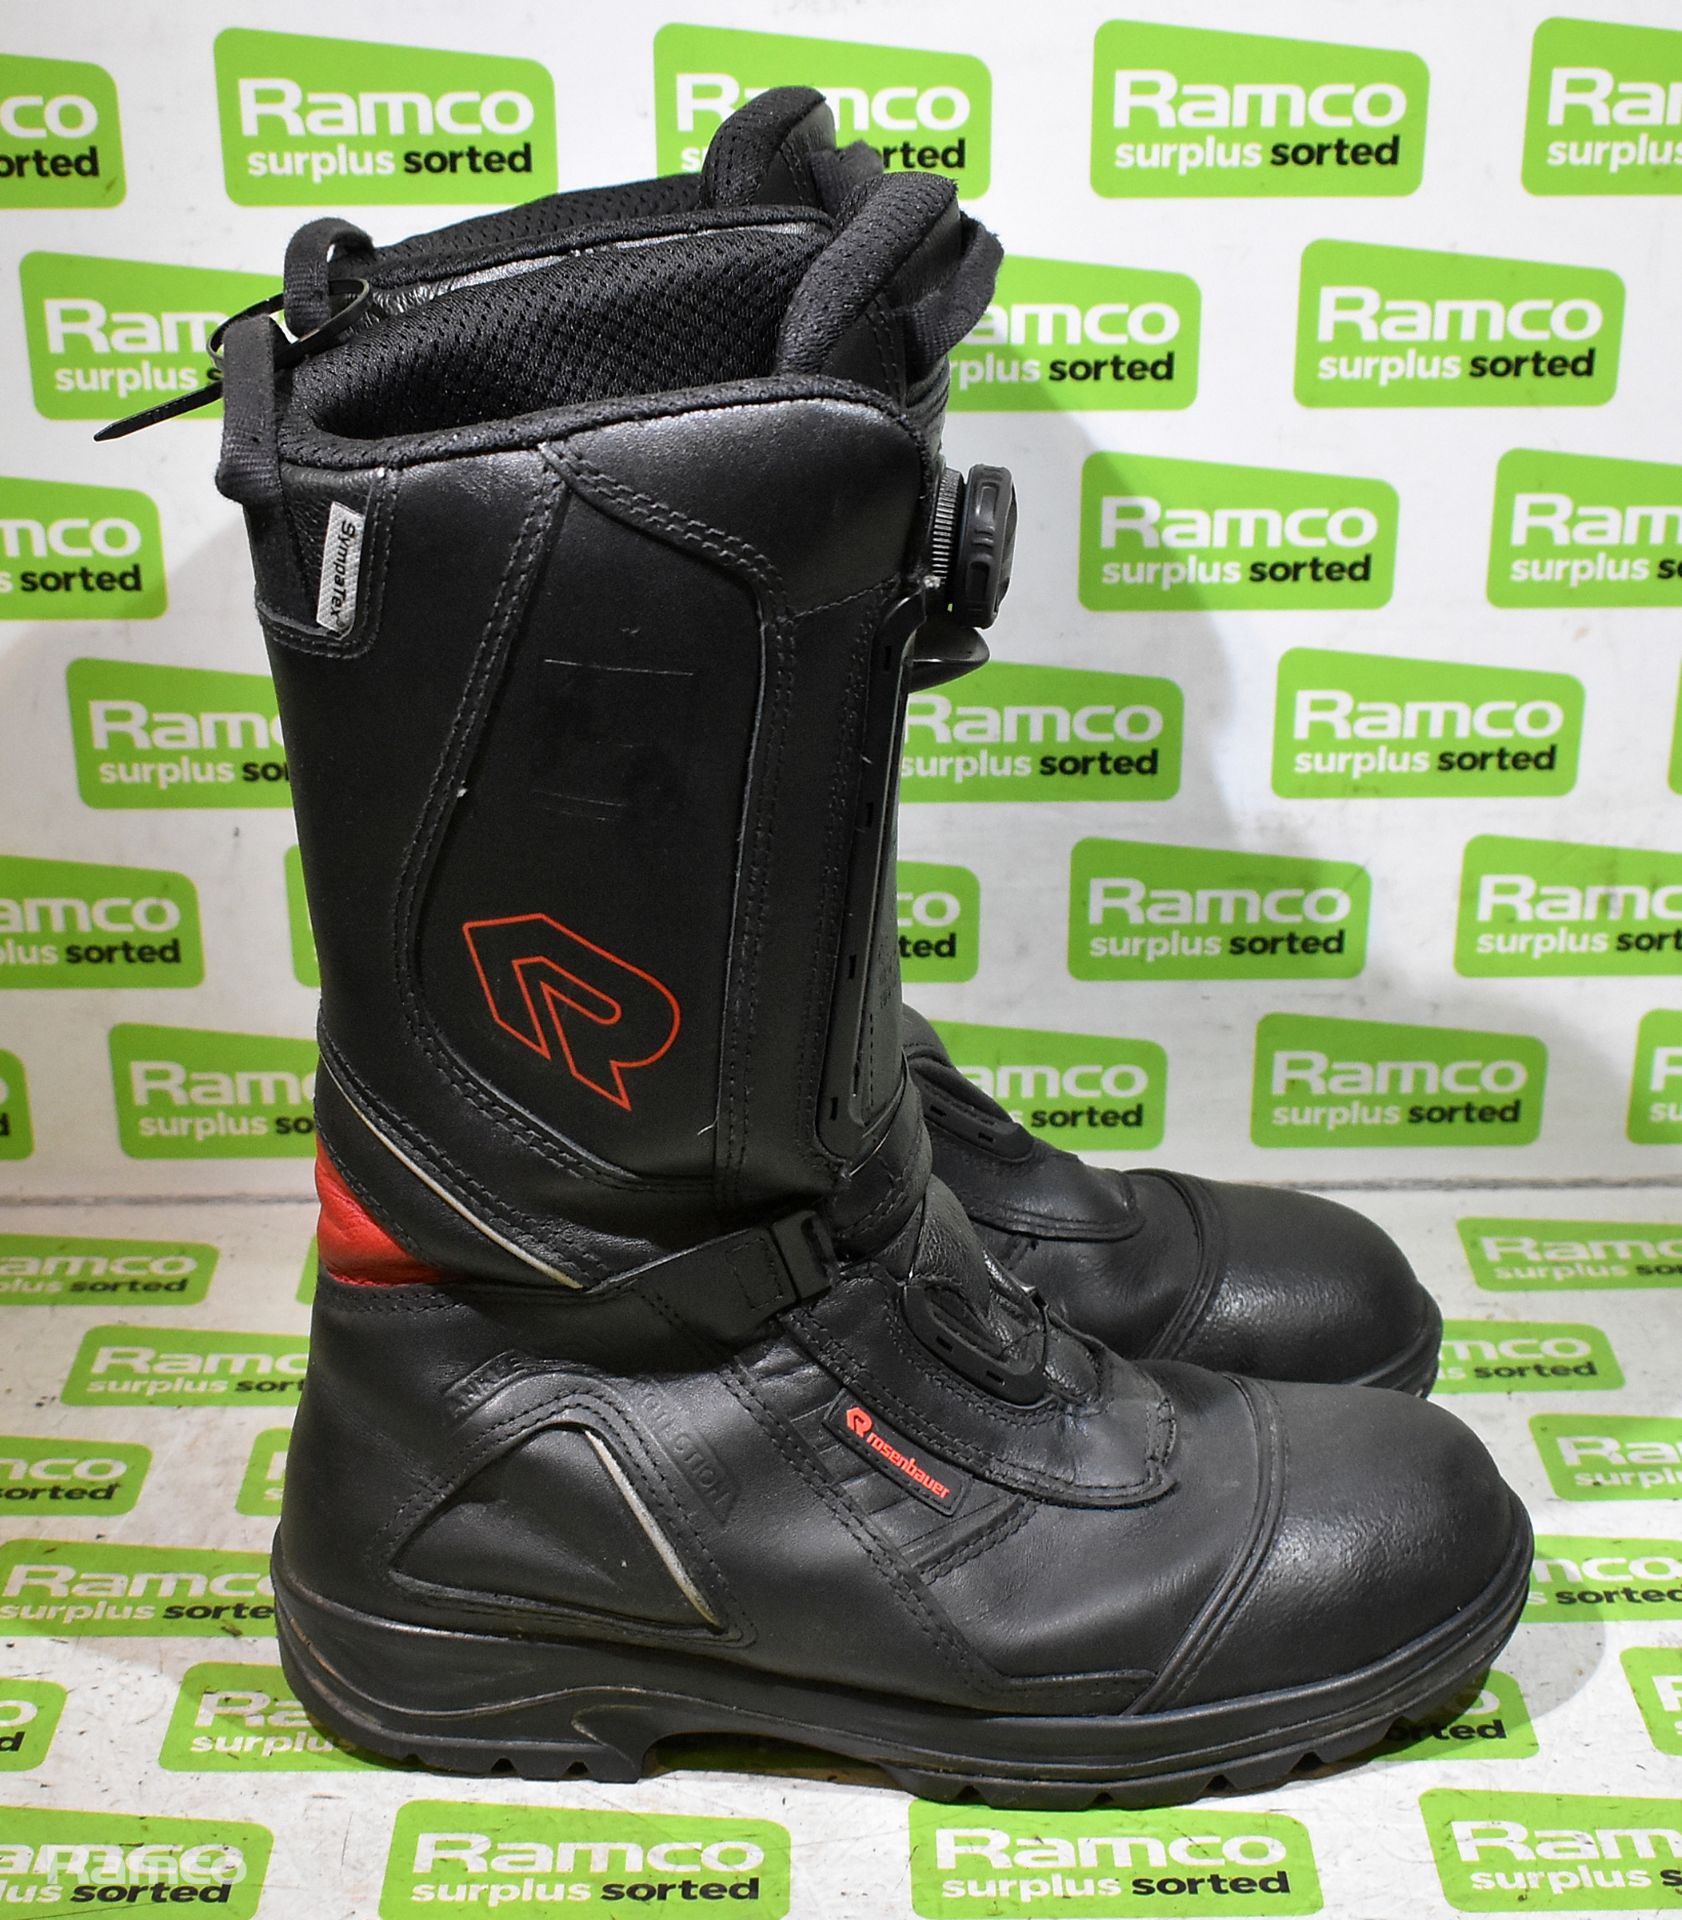 Rosenbauer Sympatex Fire & Heat Resistant Boots Pair - Size: EU 42, UK 8 - Image 2 of 5